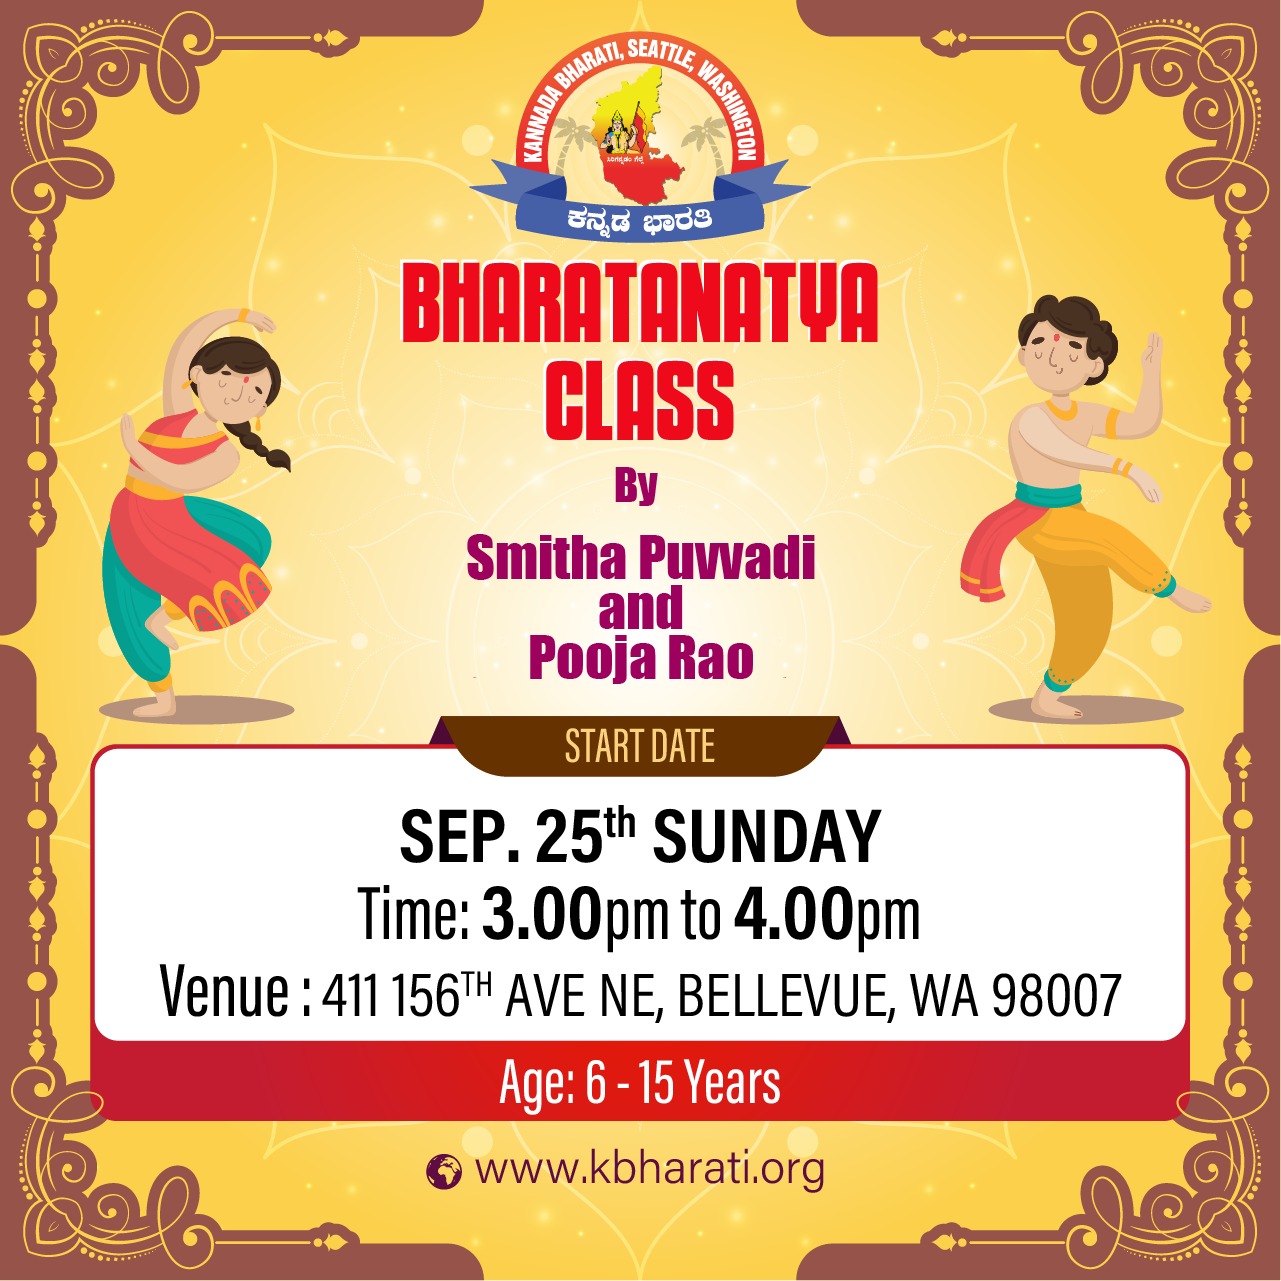 Bharatanatya Class for Kids by Smitha Puvvadi and Pooja Rao